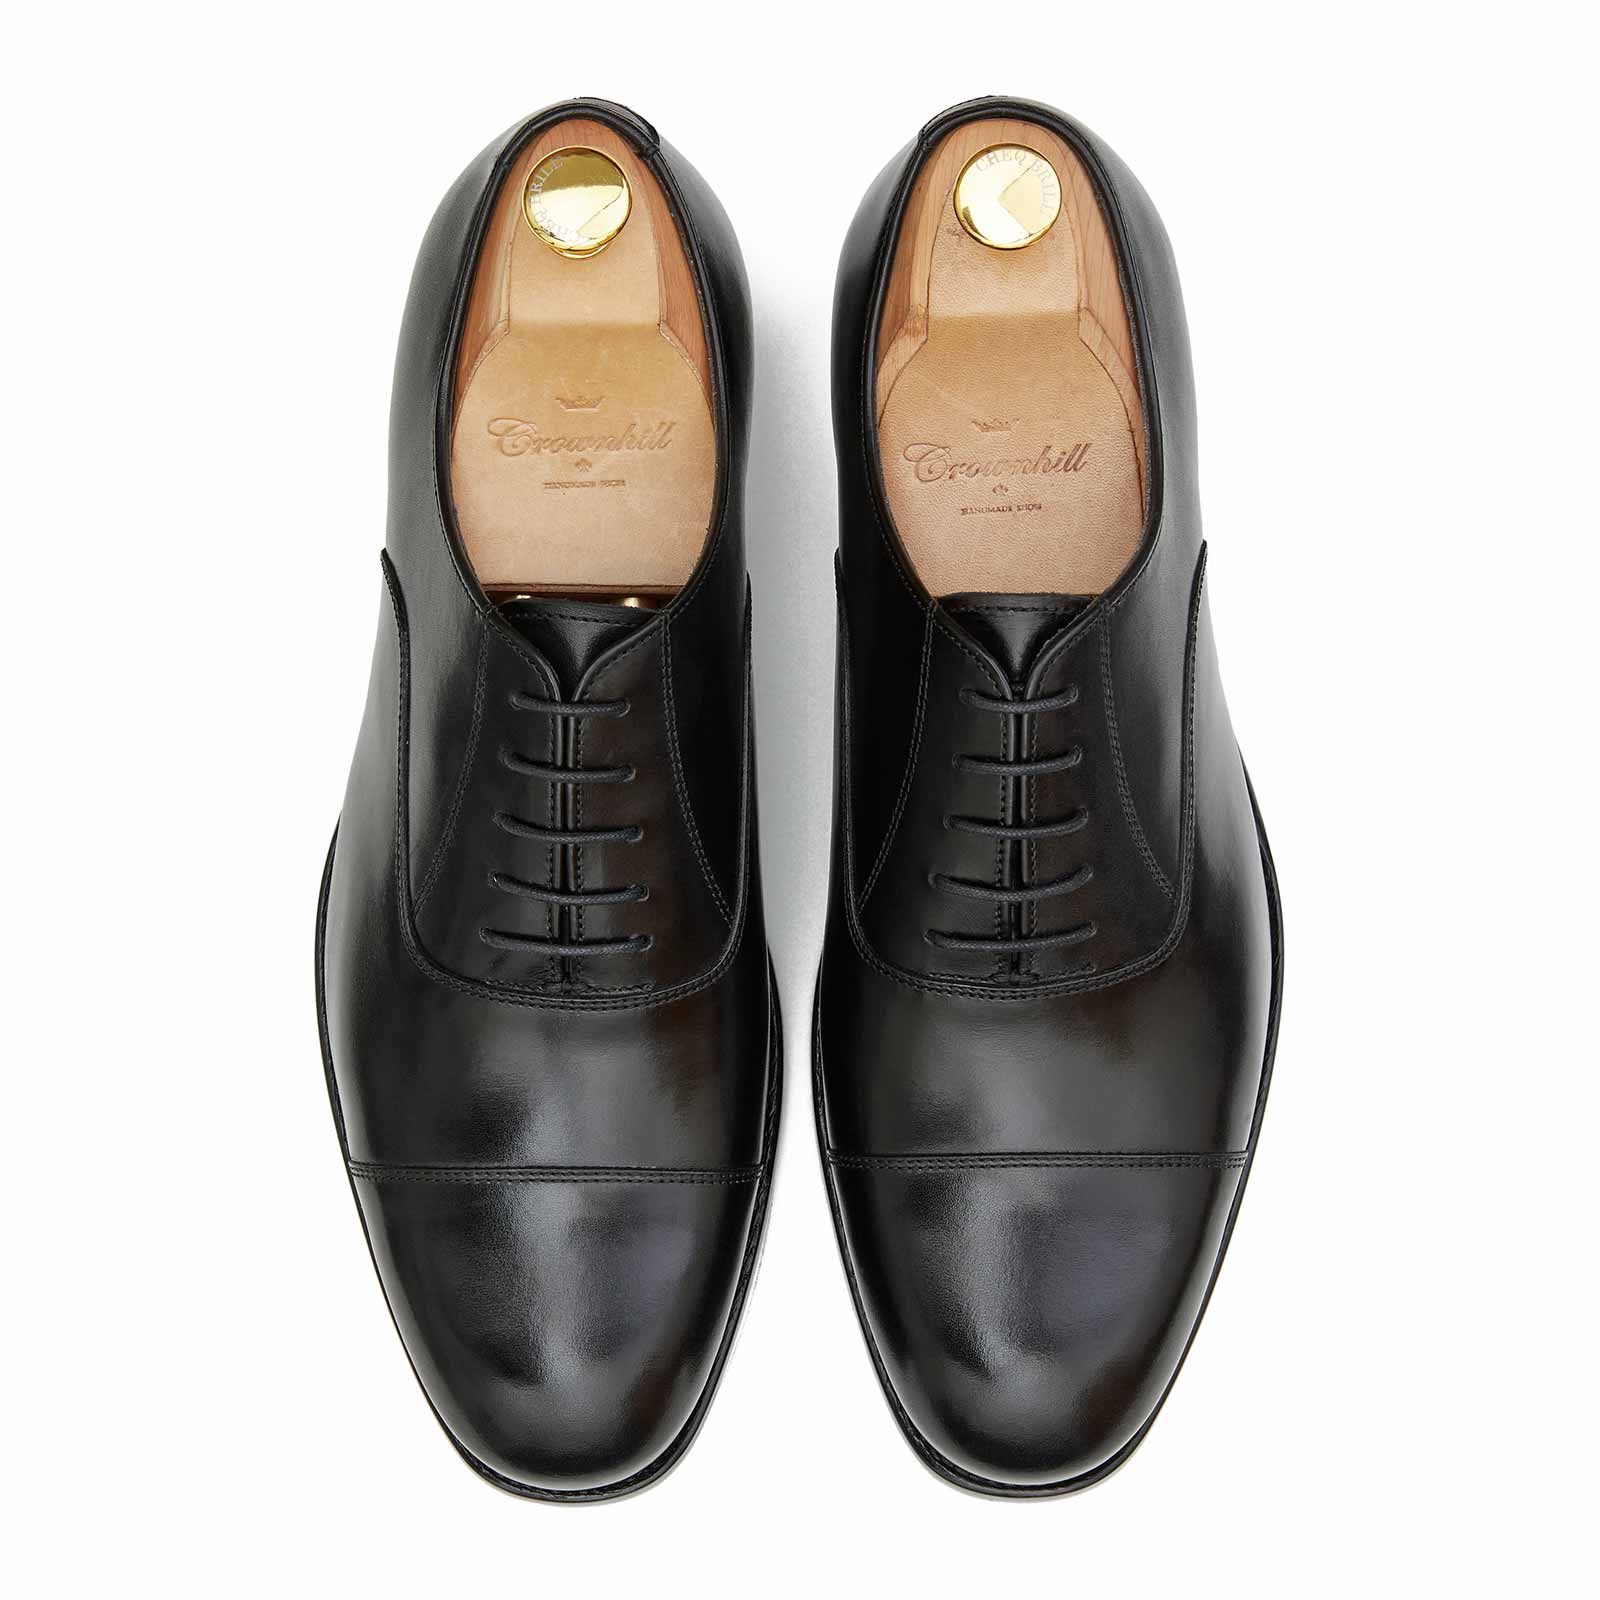 The Chicago: Zapato piel Negro | Crownhill Shoes